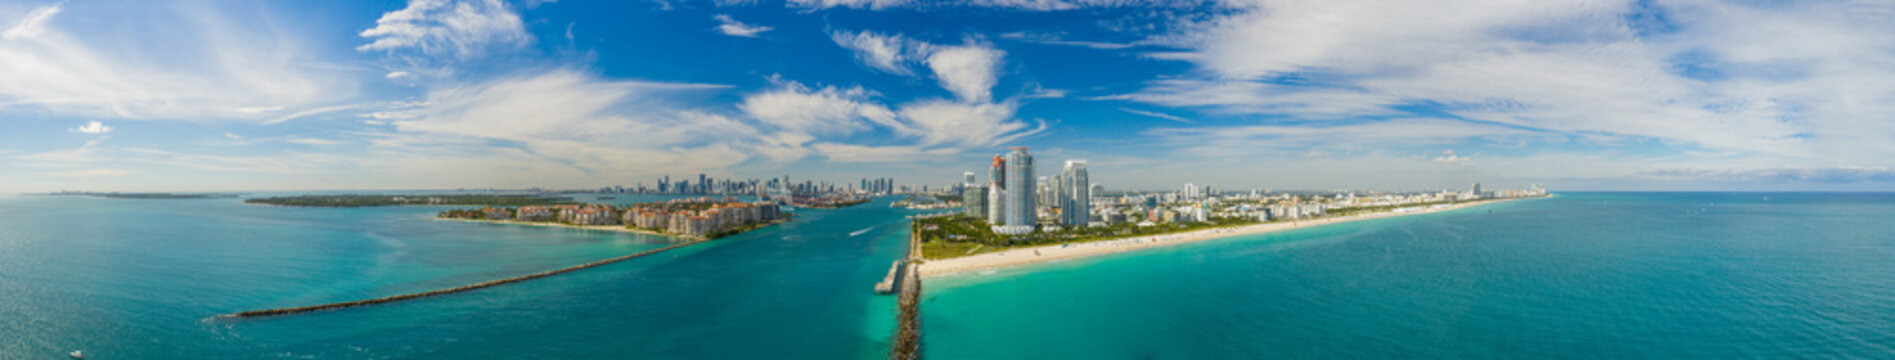 Premium wide angle panorama Miami Beach Florida landscape aerial photo